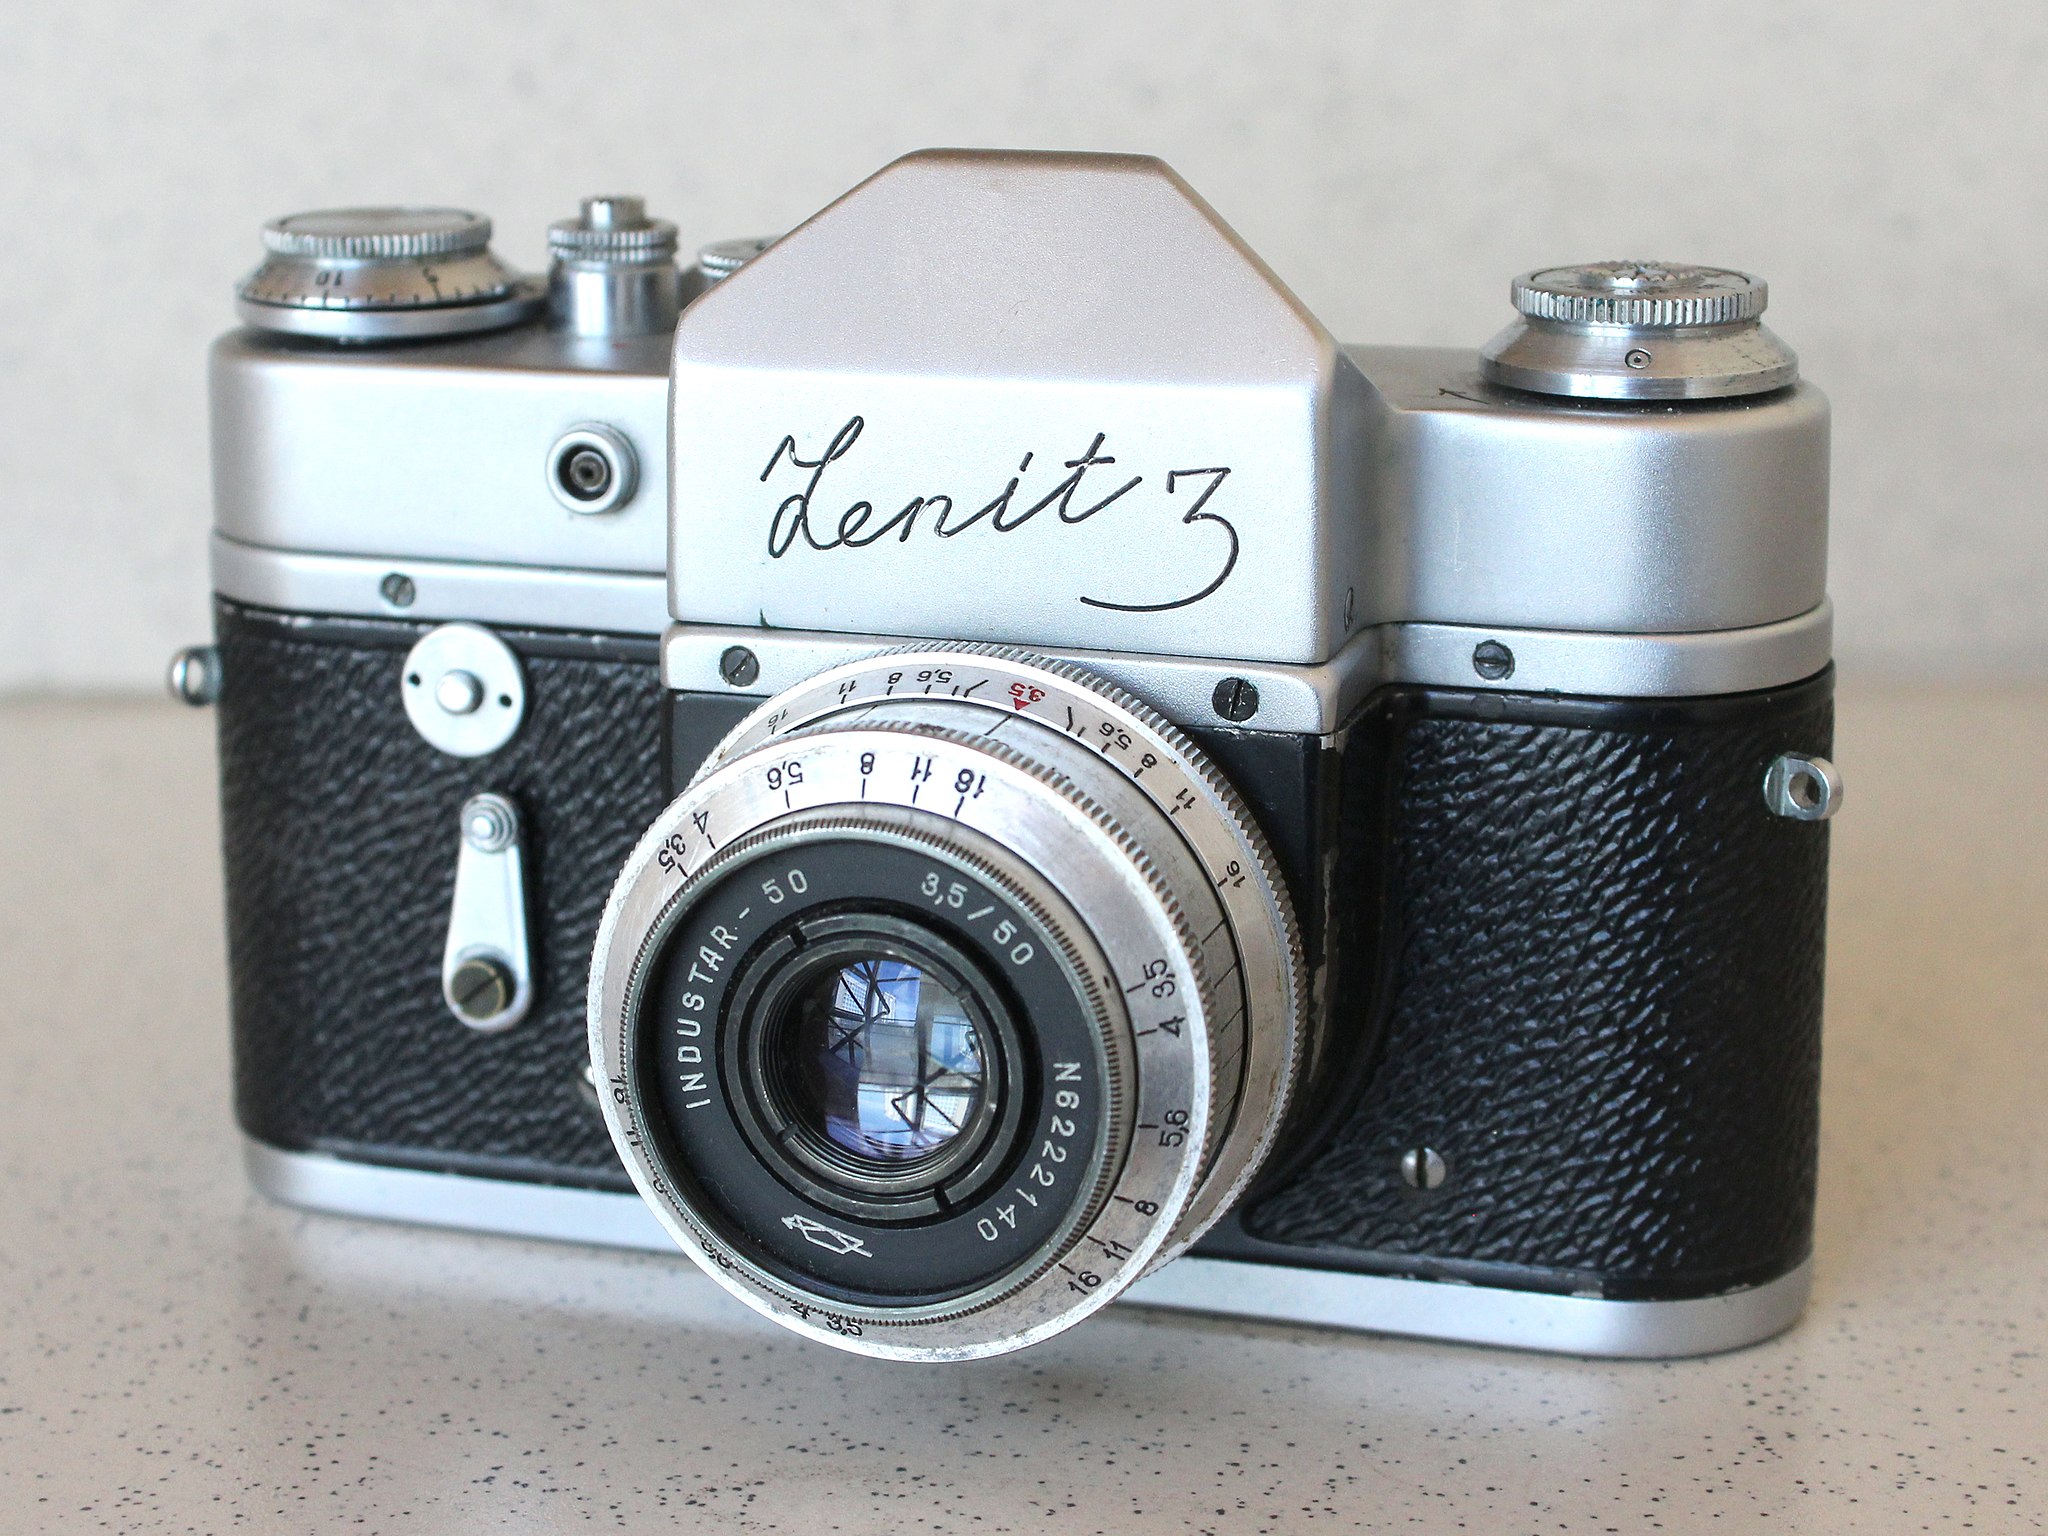 Zenit-3 (Pic: Aleste1/Wikimedia Commons)